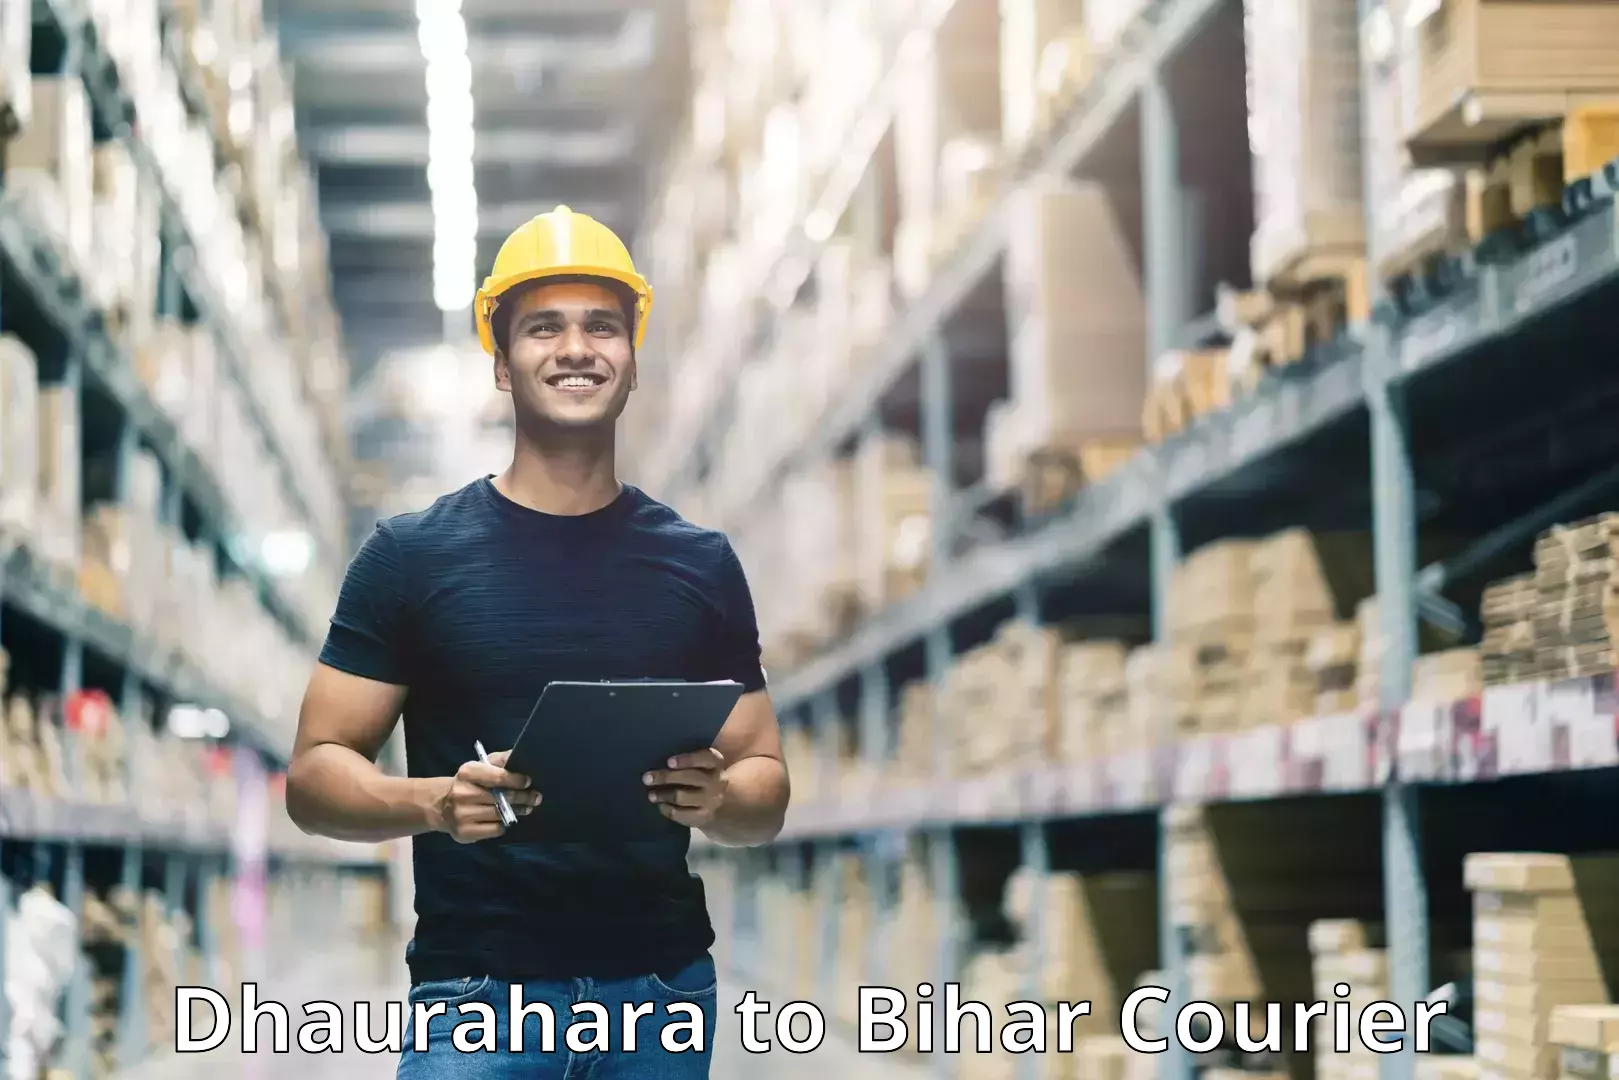 Courier service partnerships Dhaurahara to IIT Patna